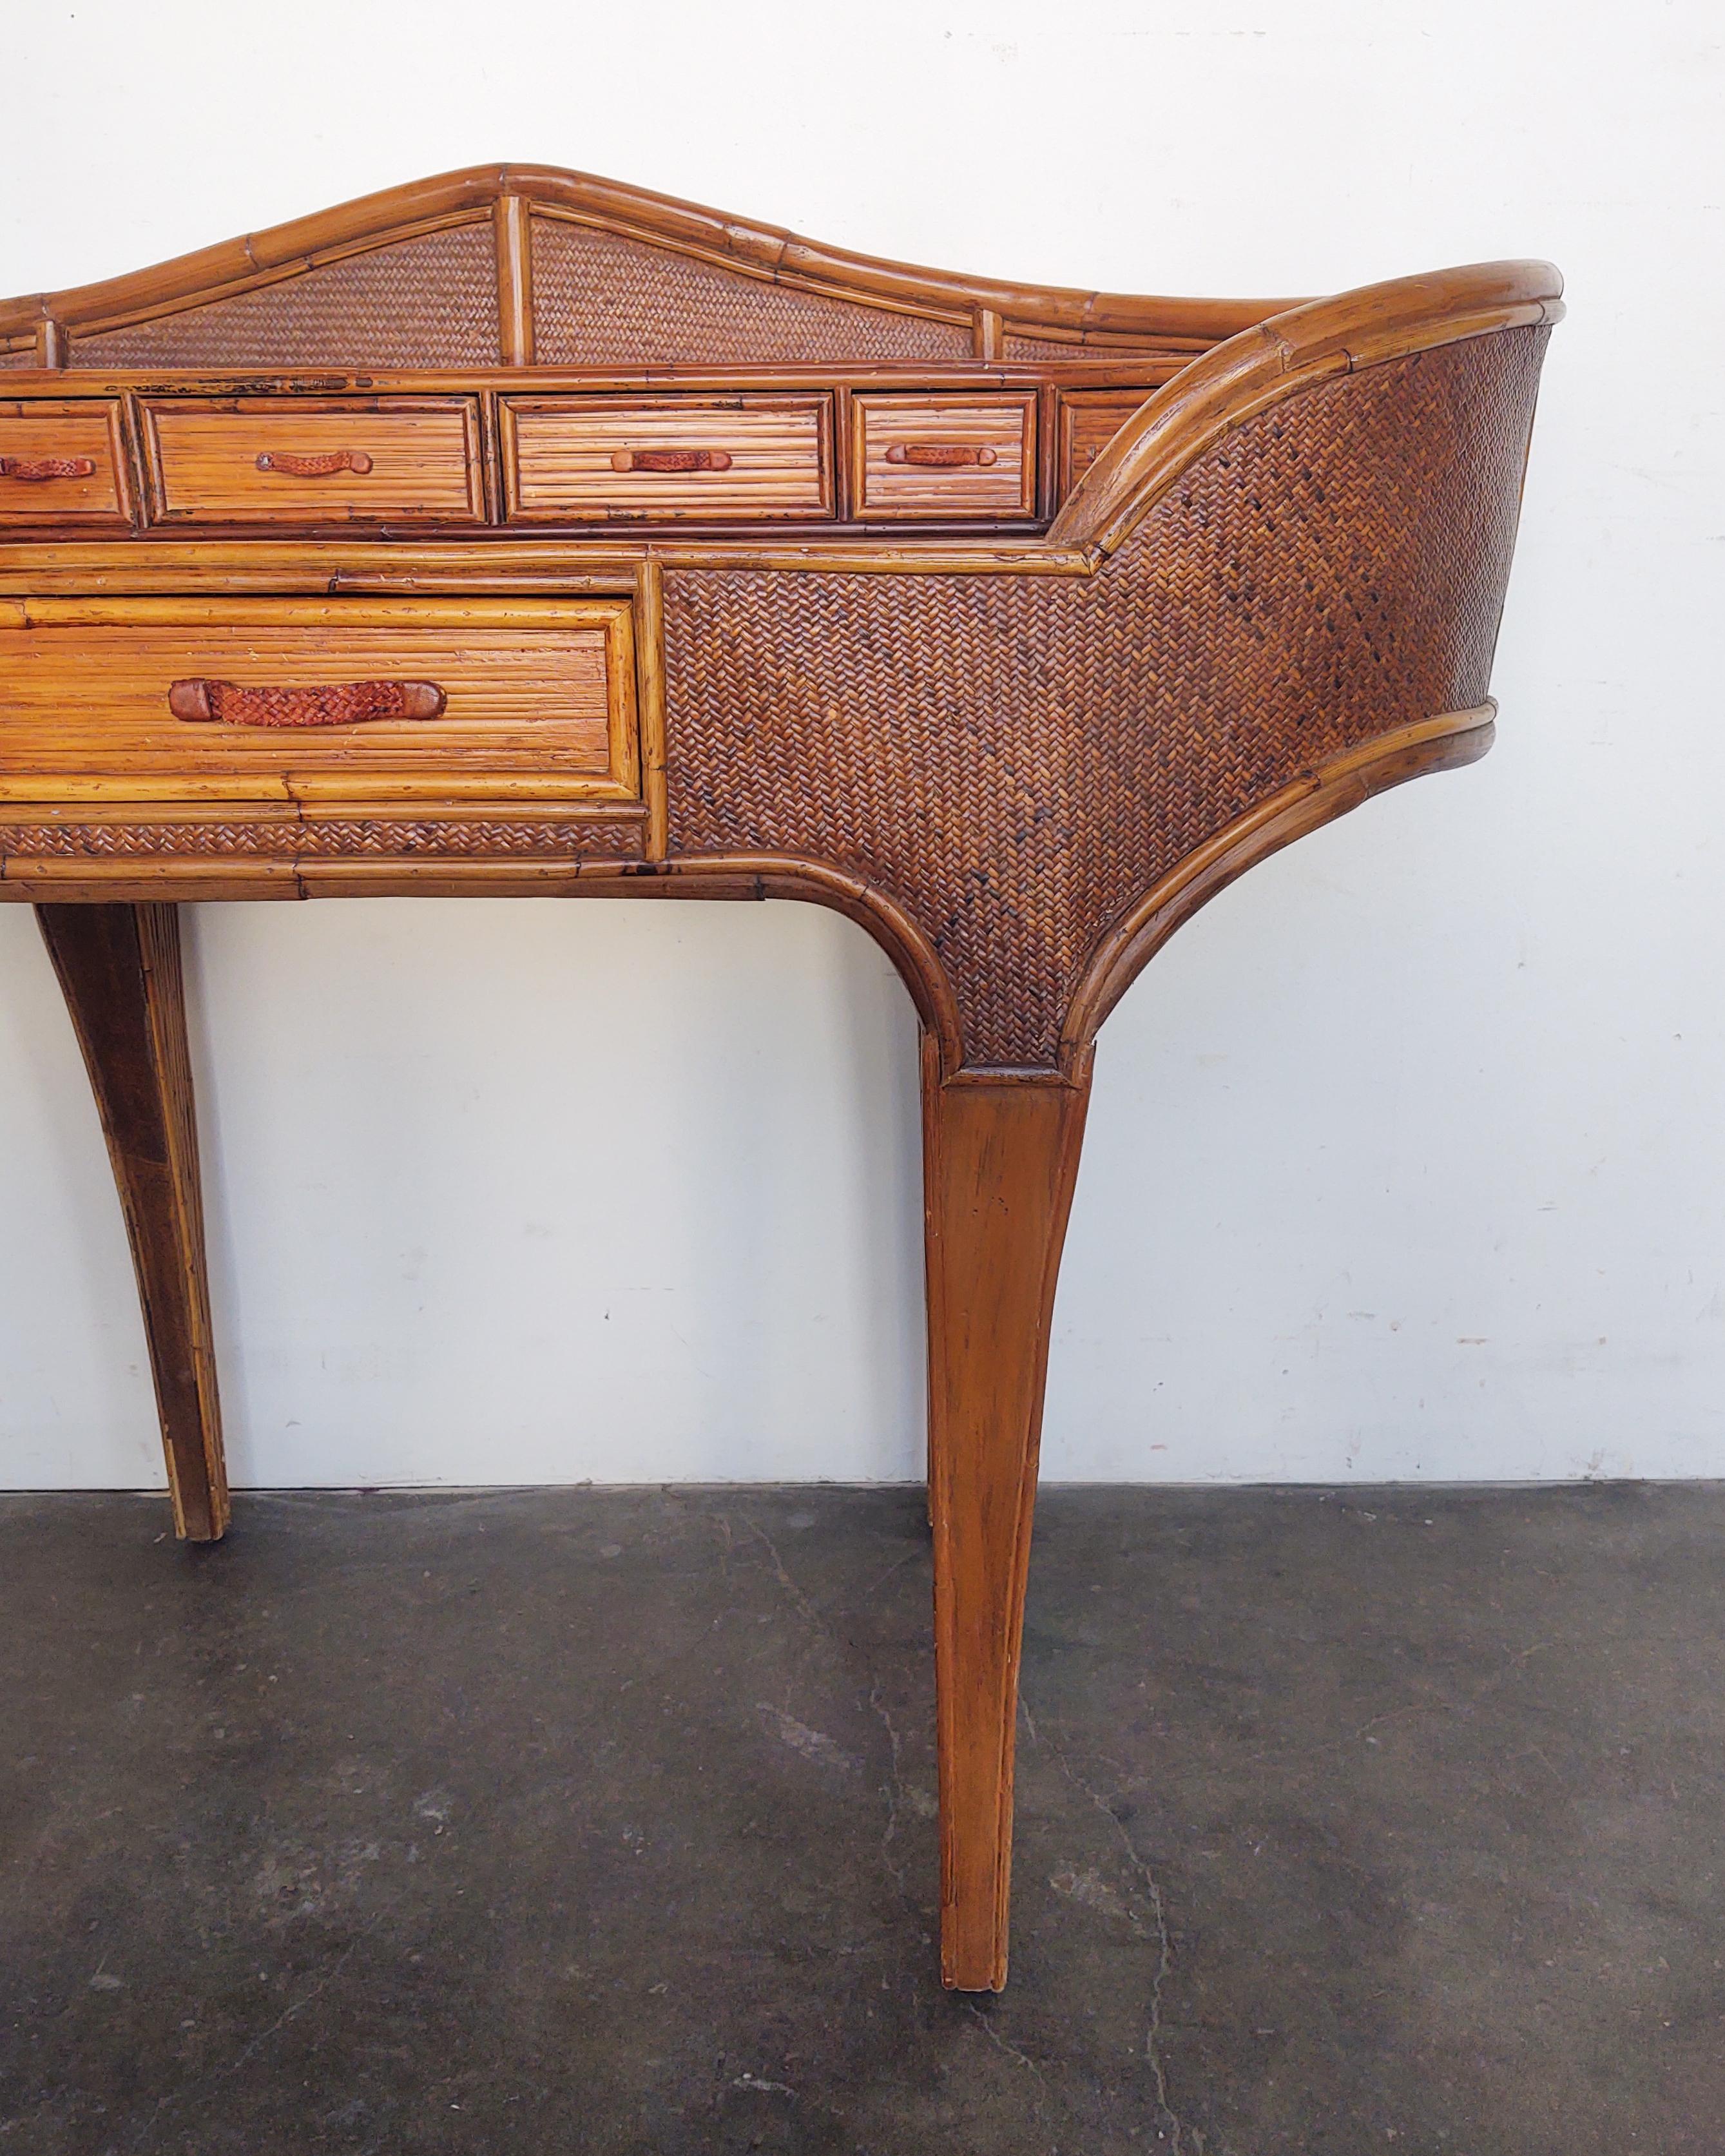 Woven Boho Chic Rattan Secretary Desk Designed by Ramon Castellano for Kalma Furniture